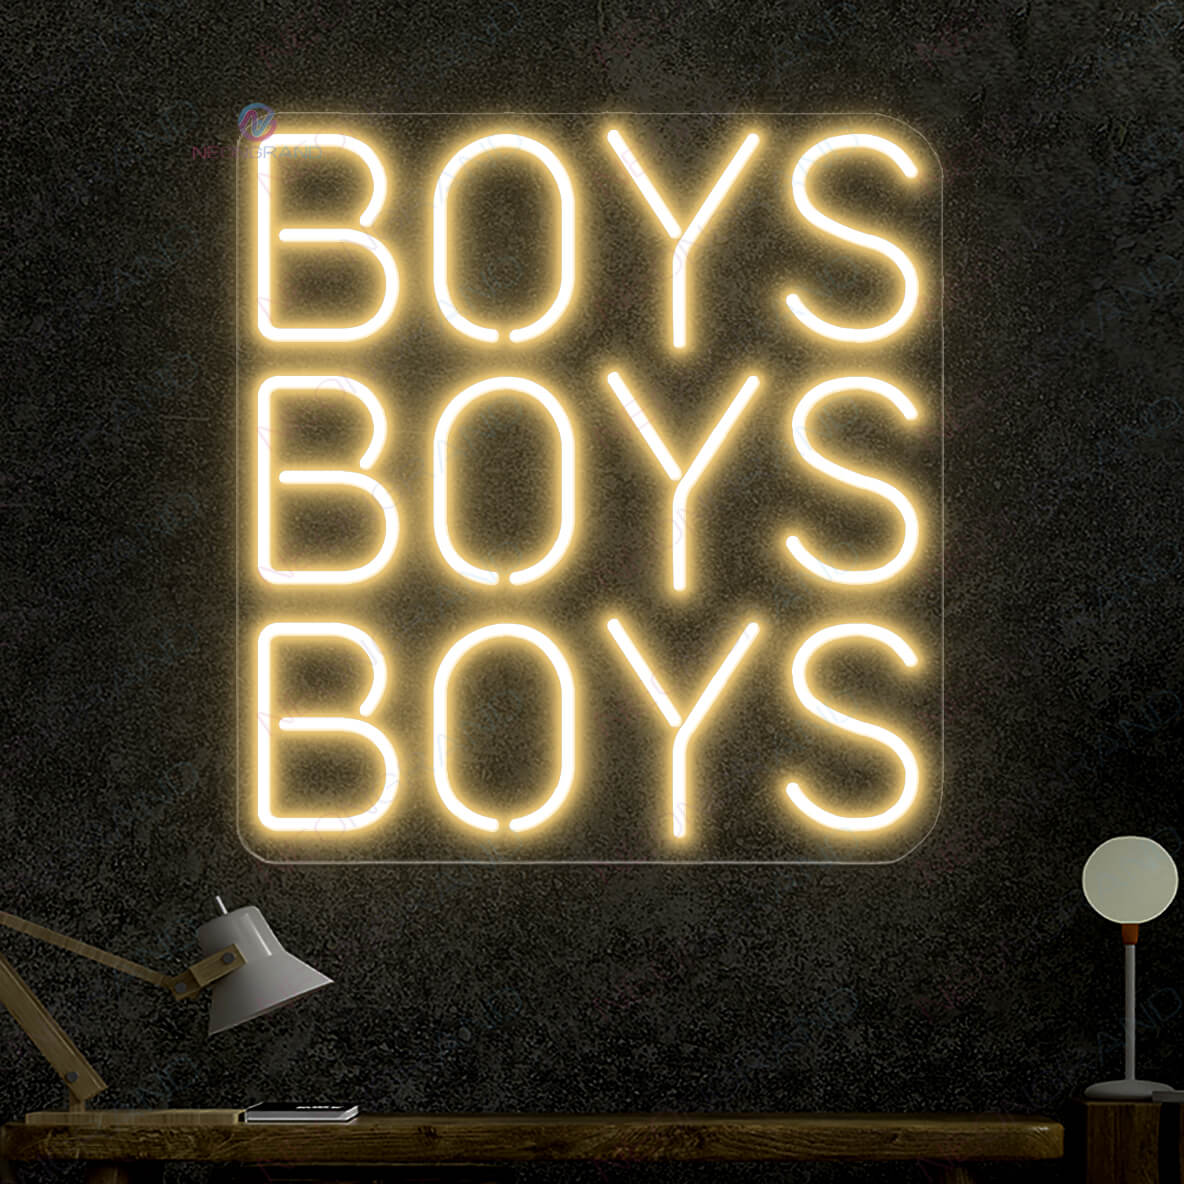 Boys Neon Sign Boys Boys Boys Led Light gold yellow